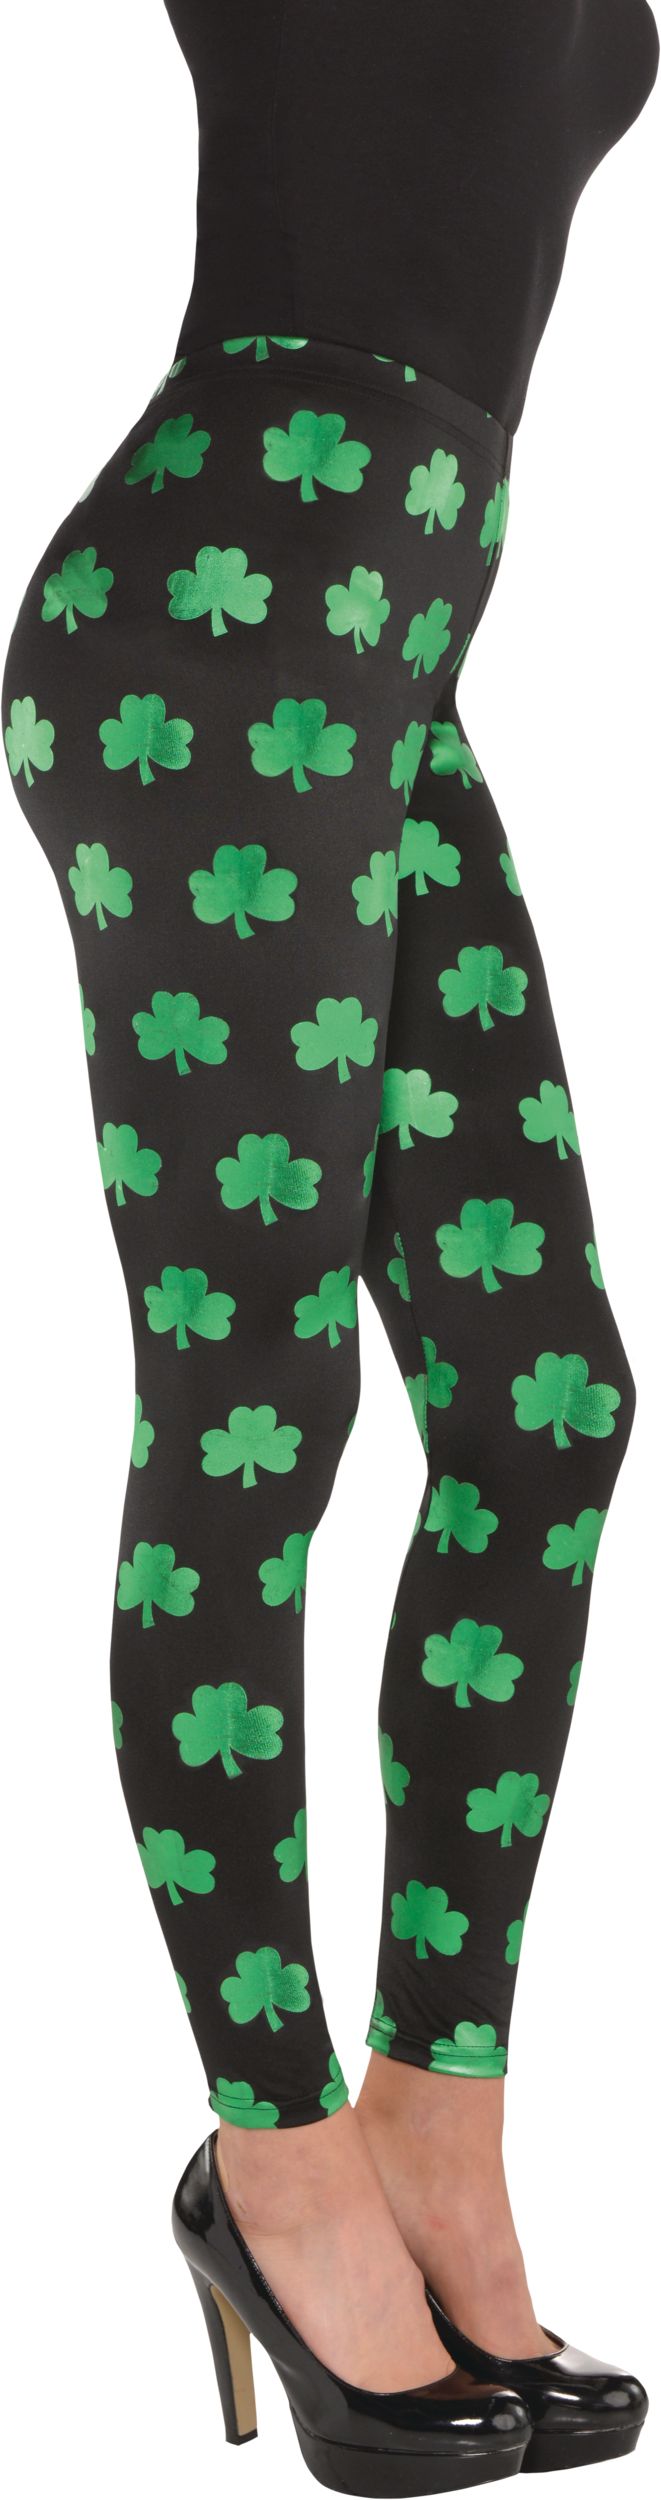 St. Patrick's Day Shiny Shamrock Leggings, Green, Adult, One Size